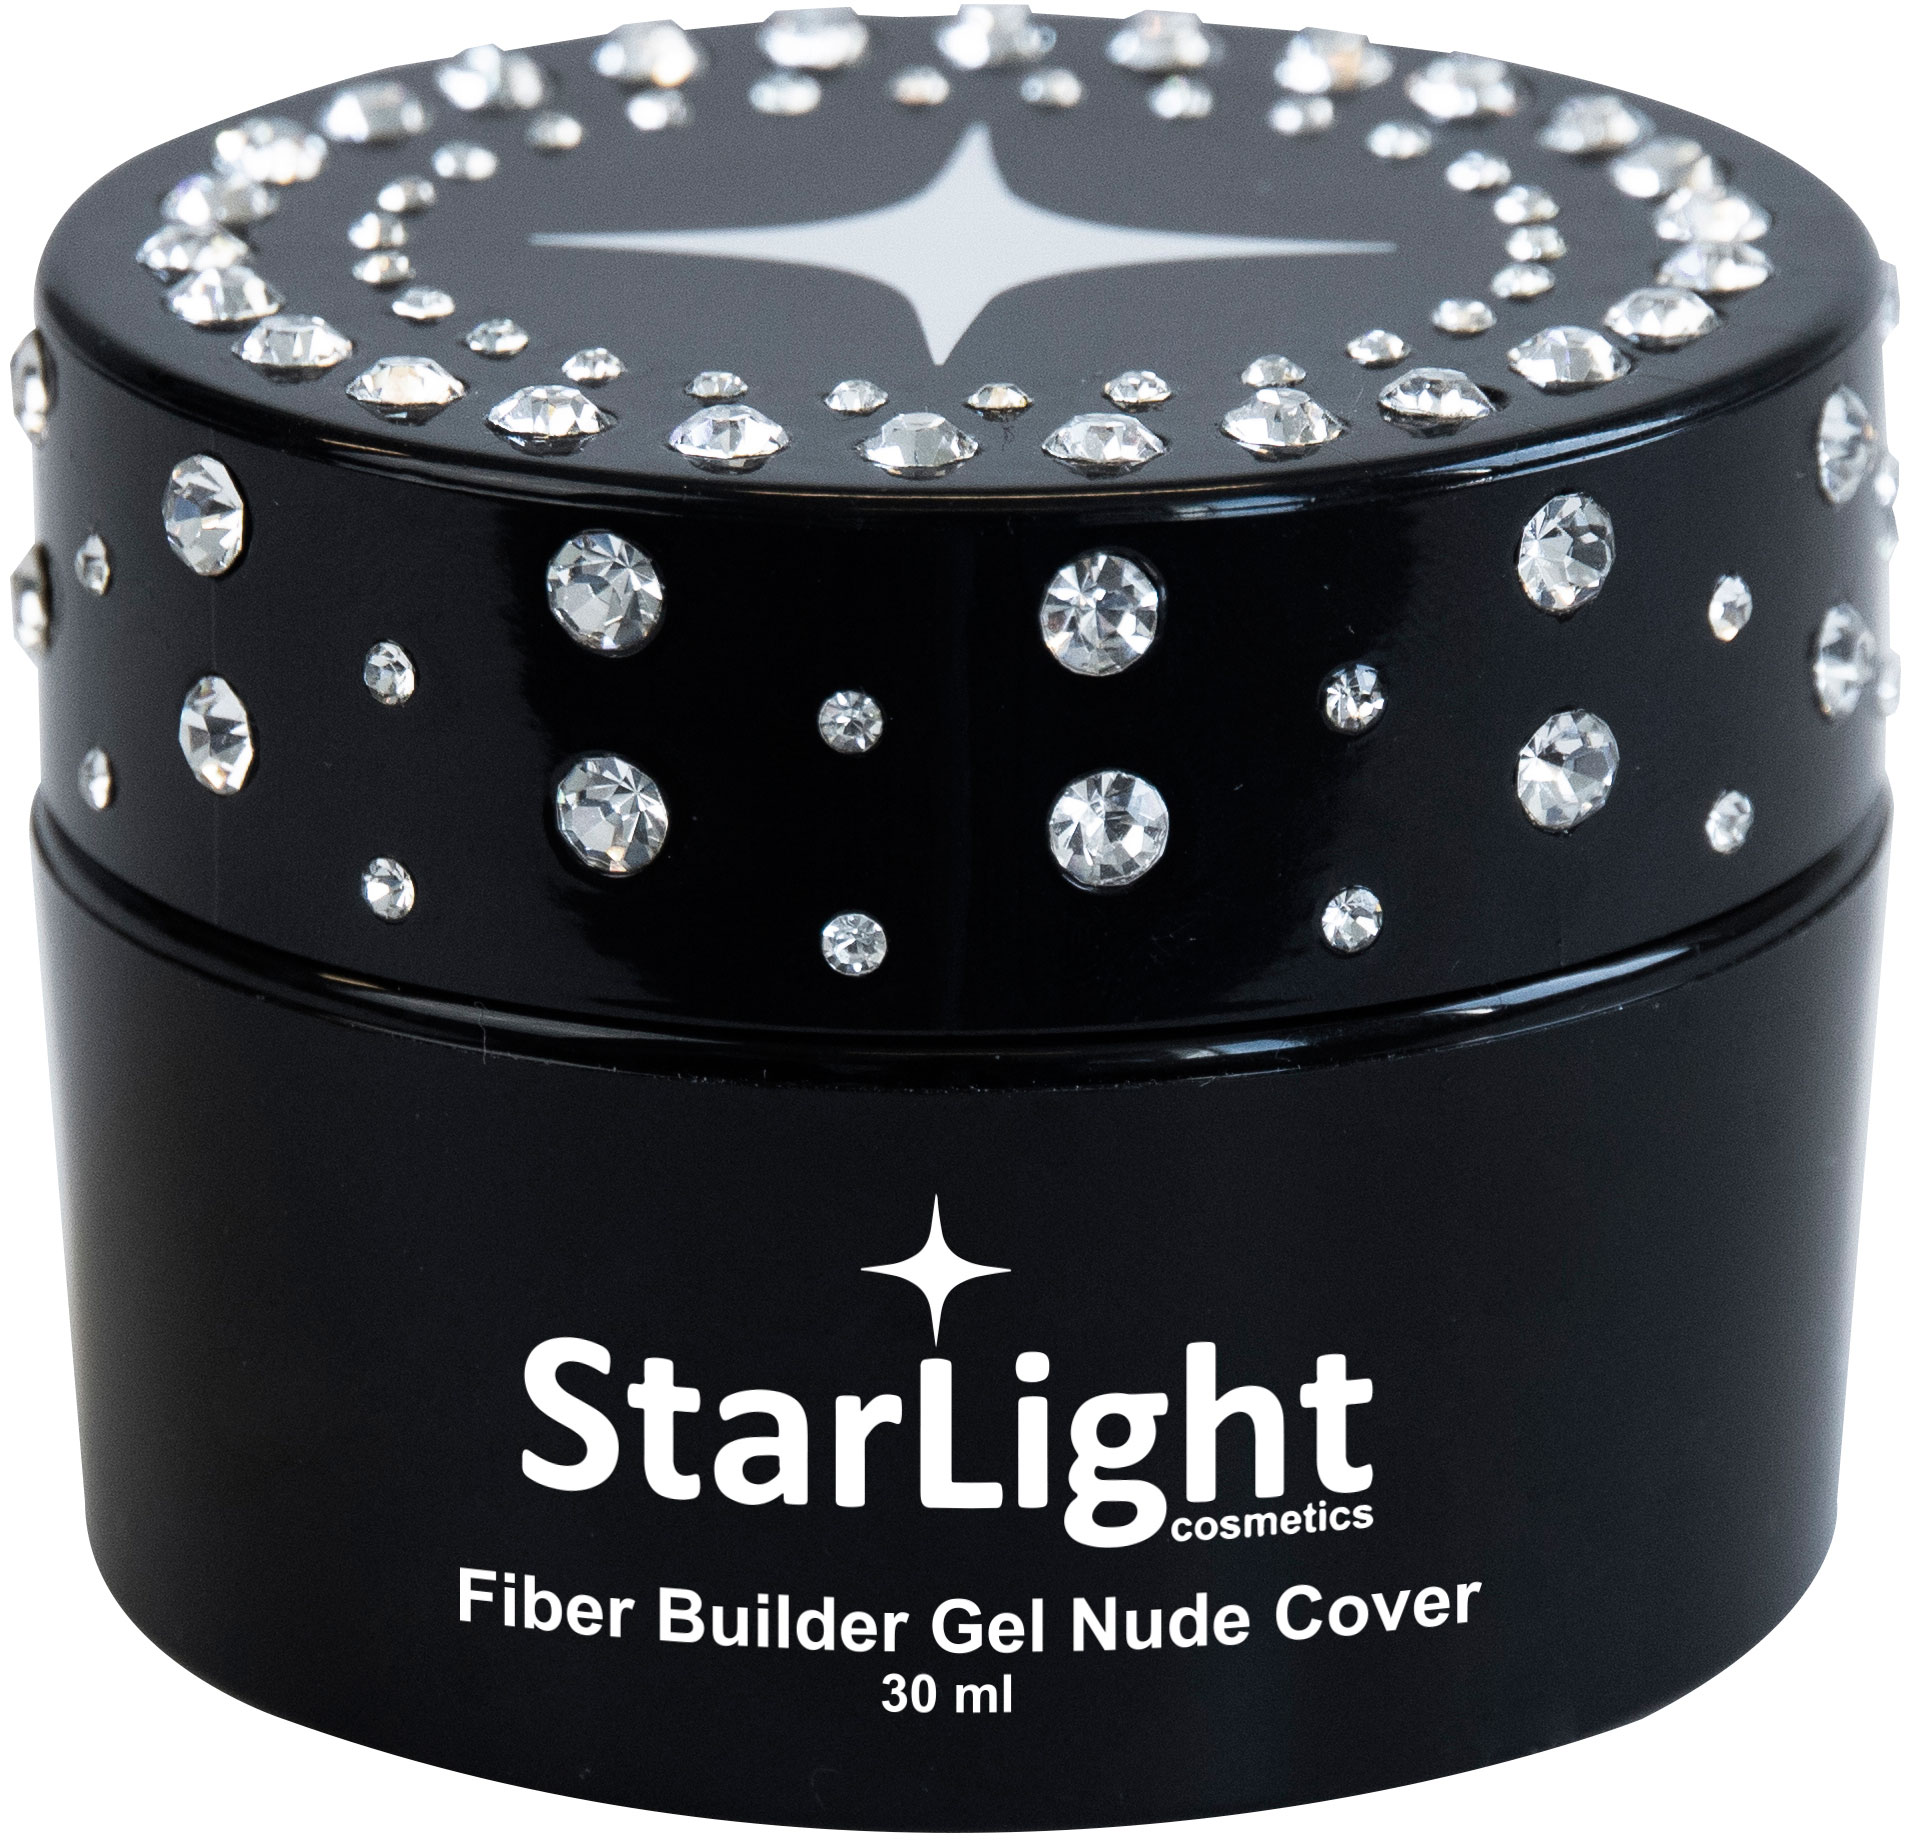 Naglar Fiber Builder Gel Nude Cover - 30 ml